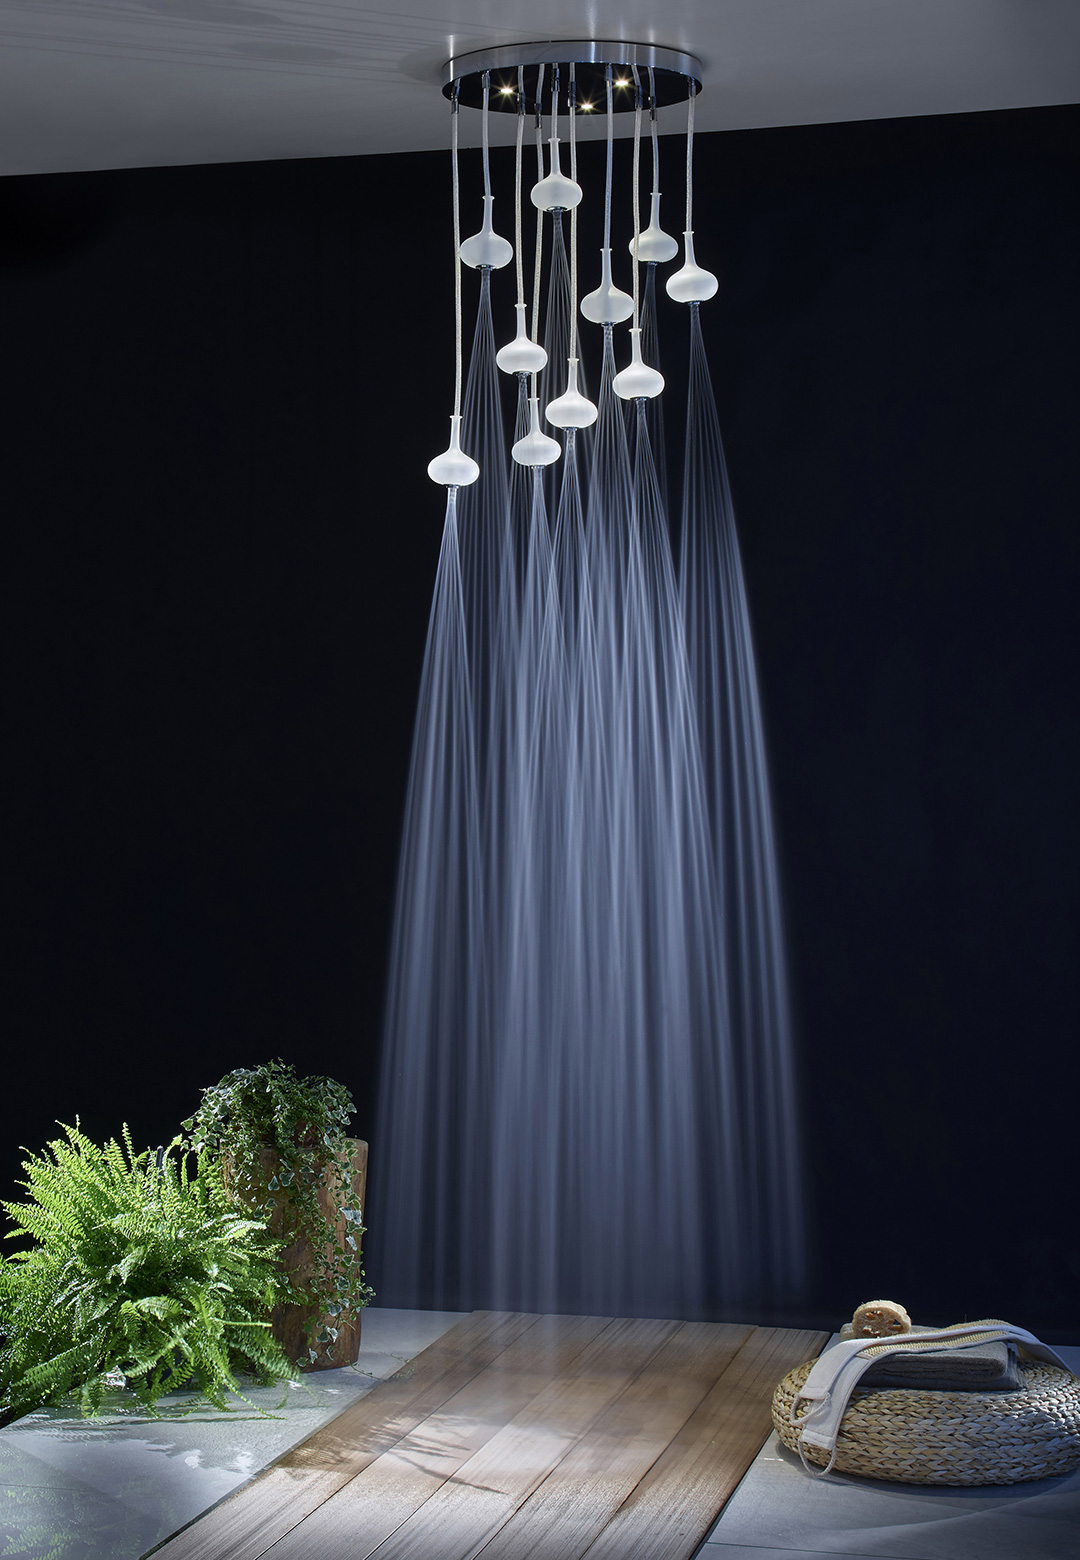 New showerhead by FIMA Carlo Frattini x Melogranoblu resembles a spherical chandelier